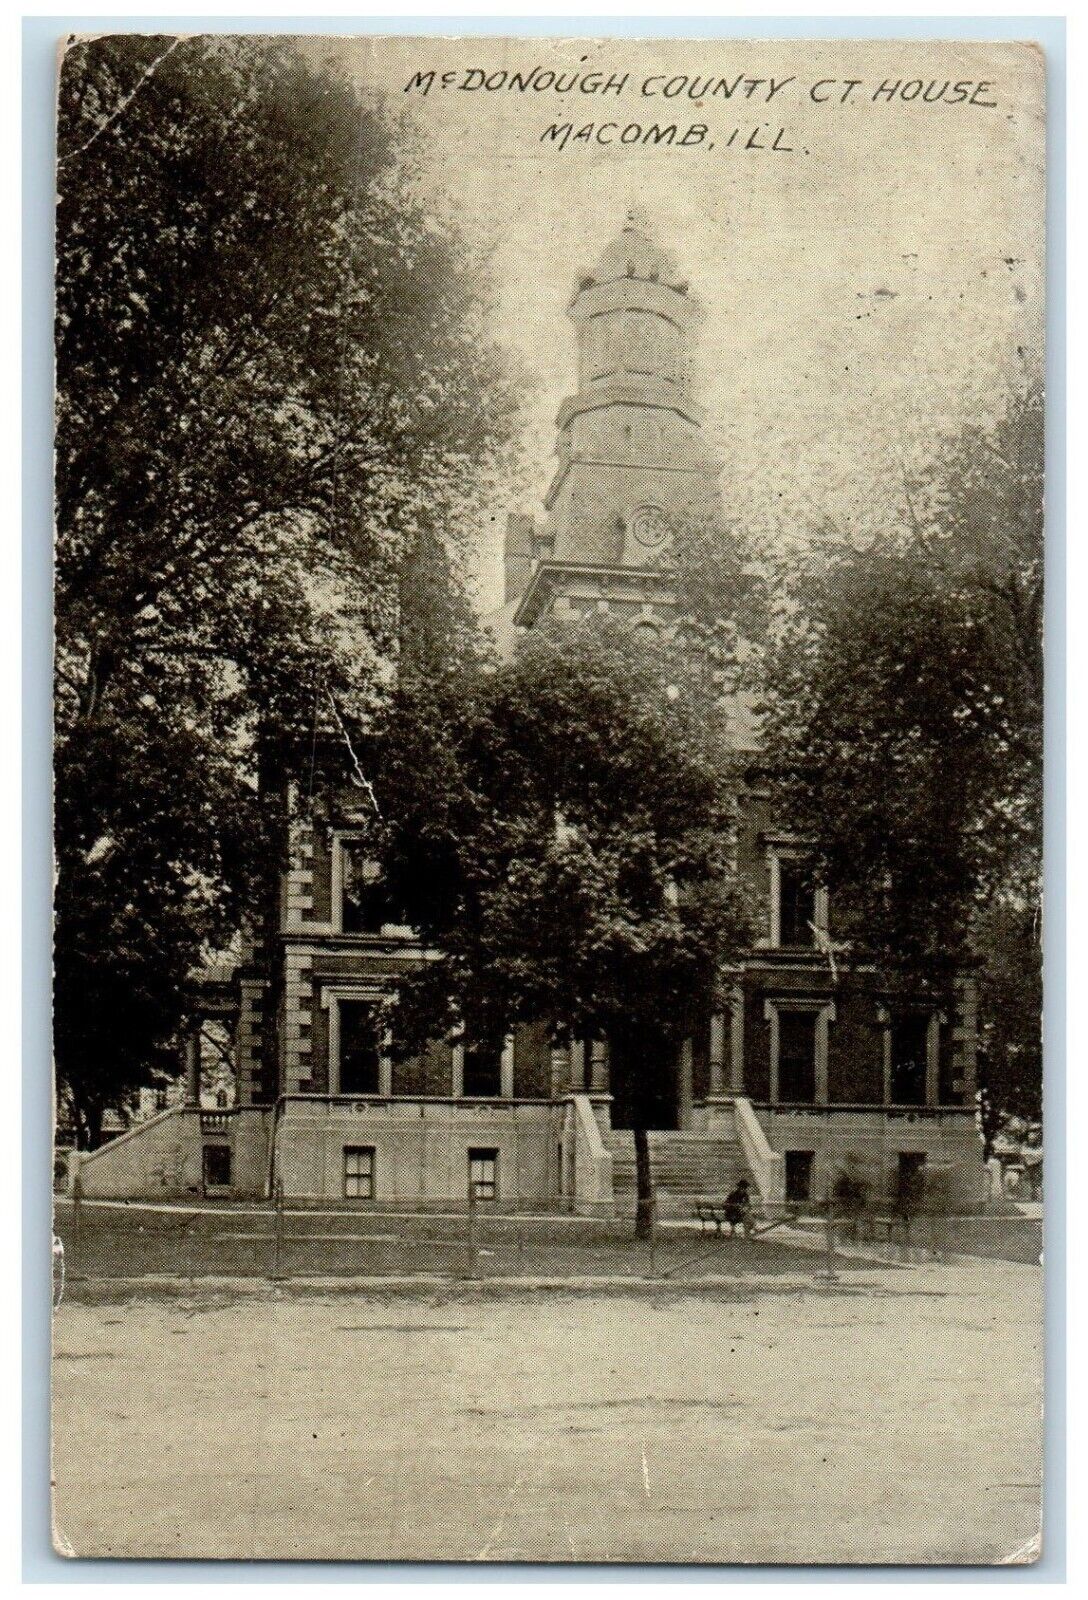 1910 McDonough County Ct House Exterior Macomb Illinois Vintage Antique Postcard